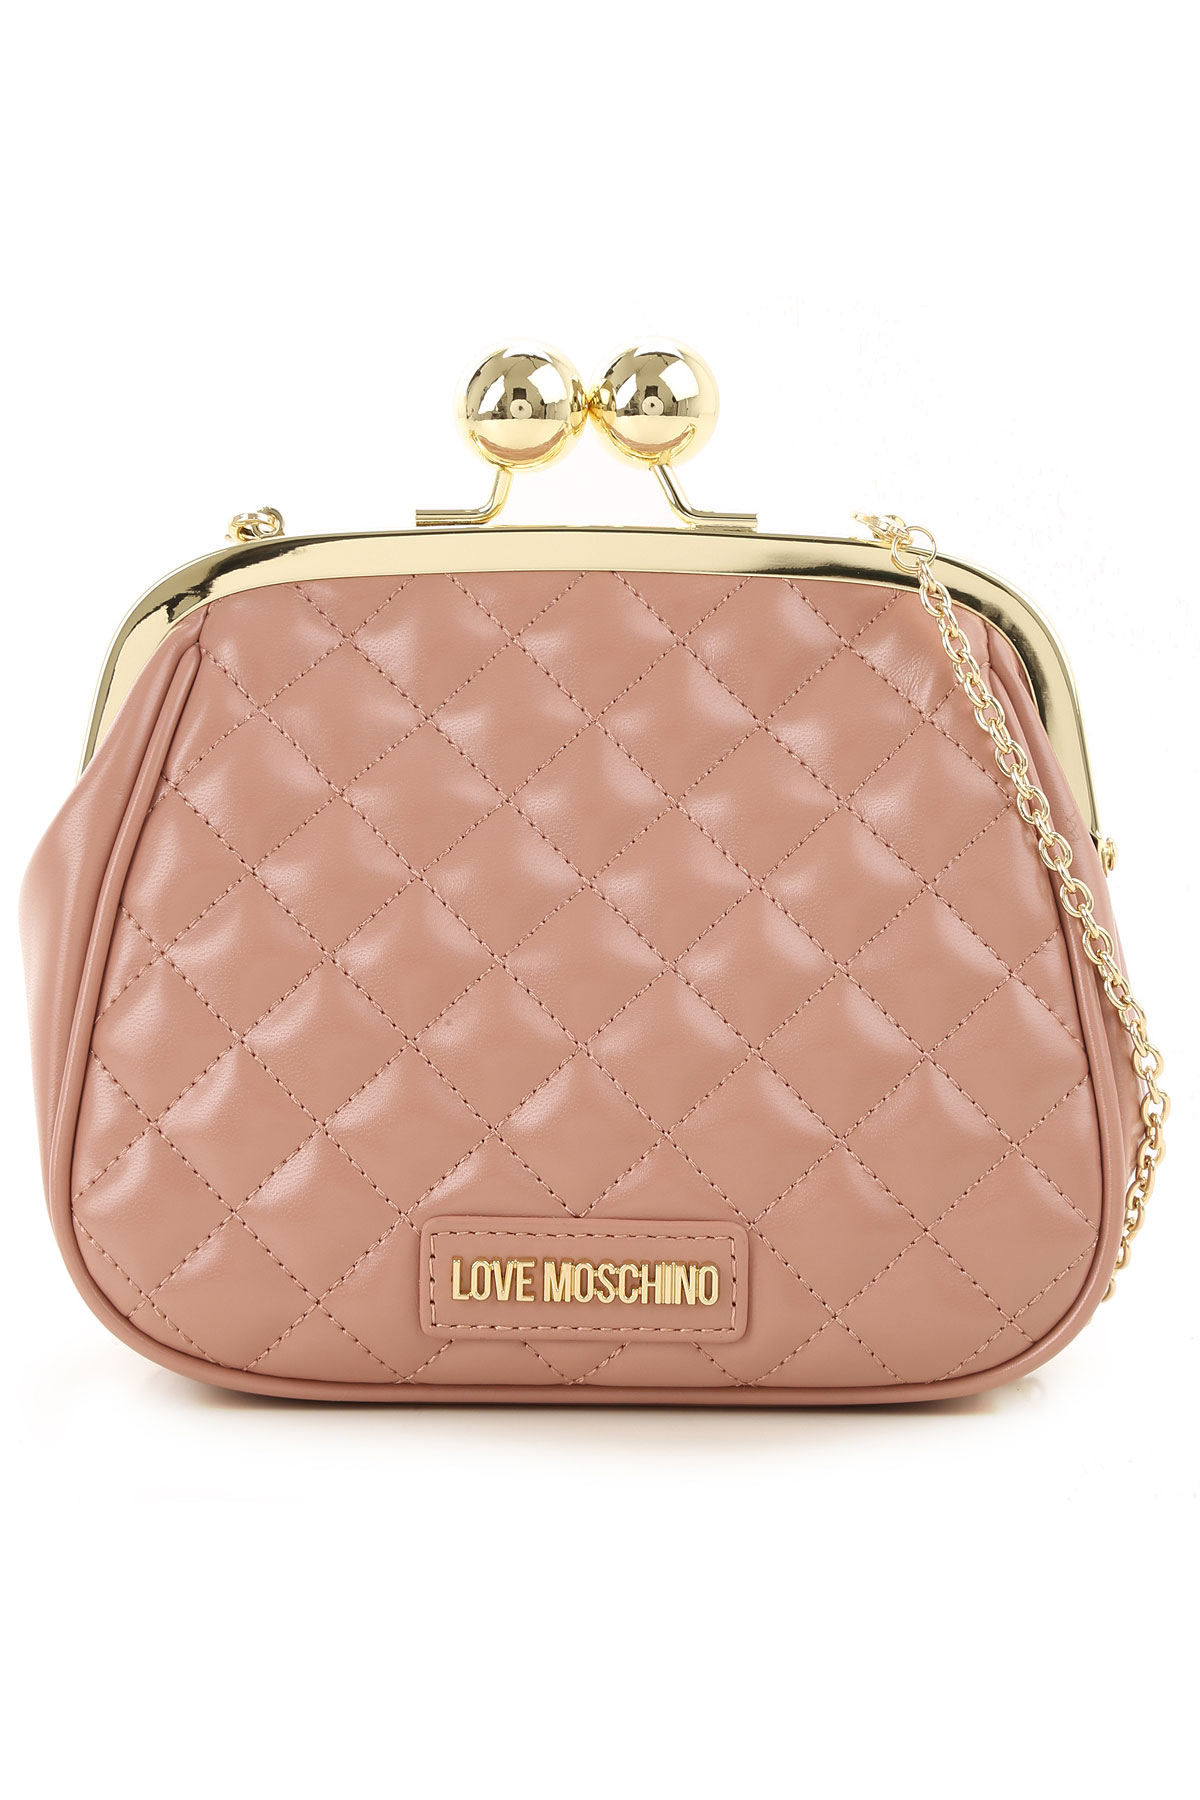 Handbags Moschino, Style code: jc4250pp08ka0601--